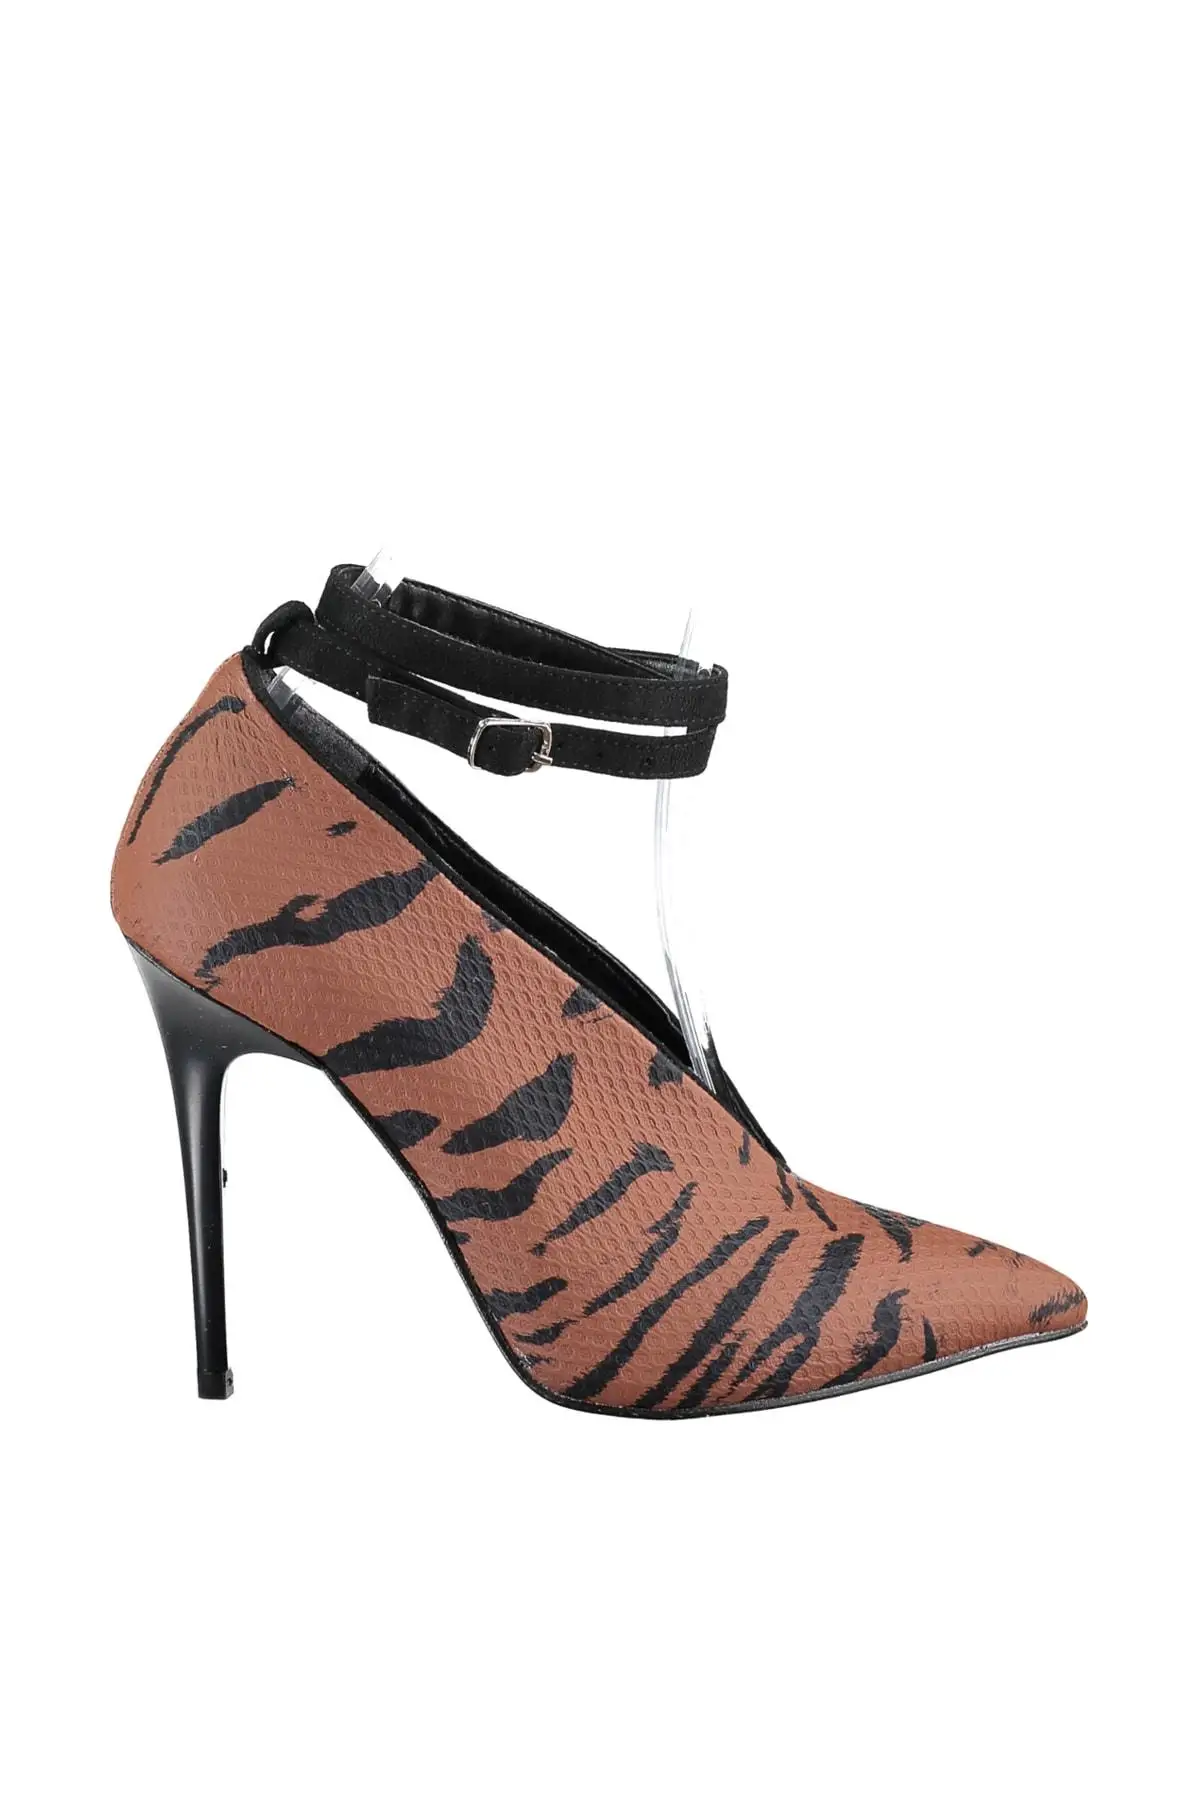 Trendyol/коричневые женские туфли на высоком каблуке с рисунком зебры TAKAW20TO0020